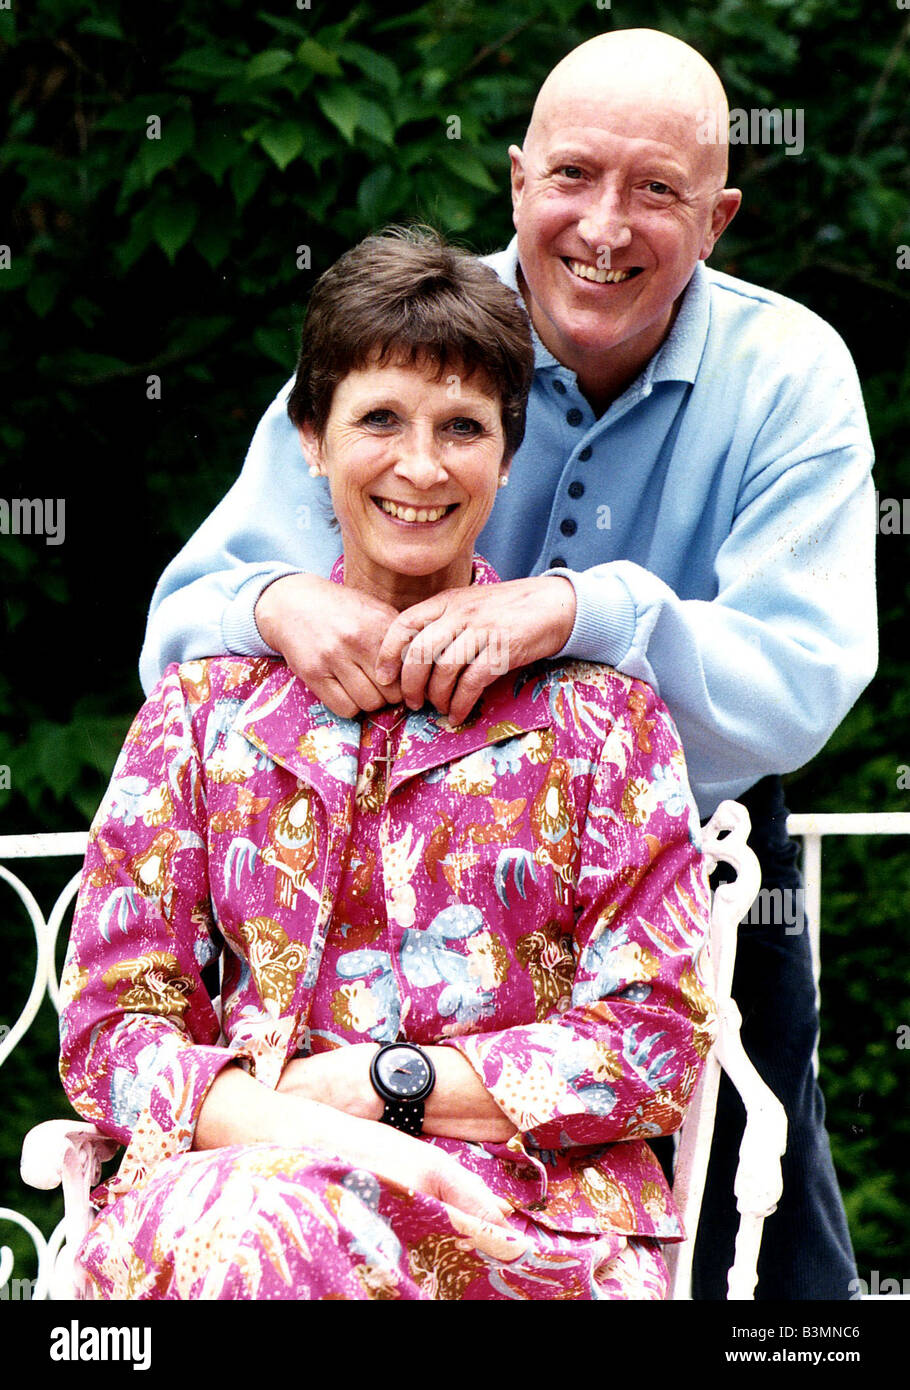 Roy Castle TV Presenter standing behind wife in garden Stock Photo - Alamy